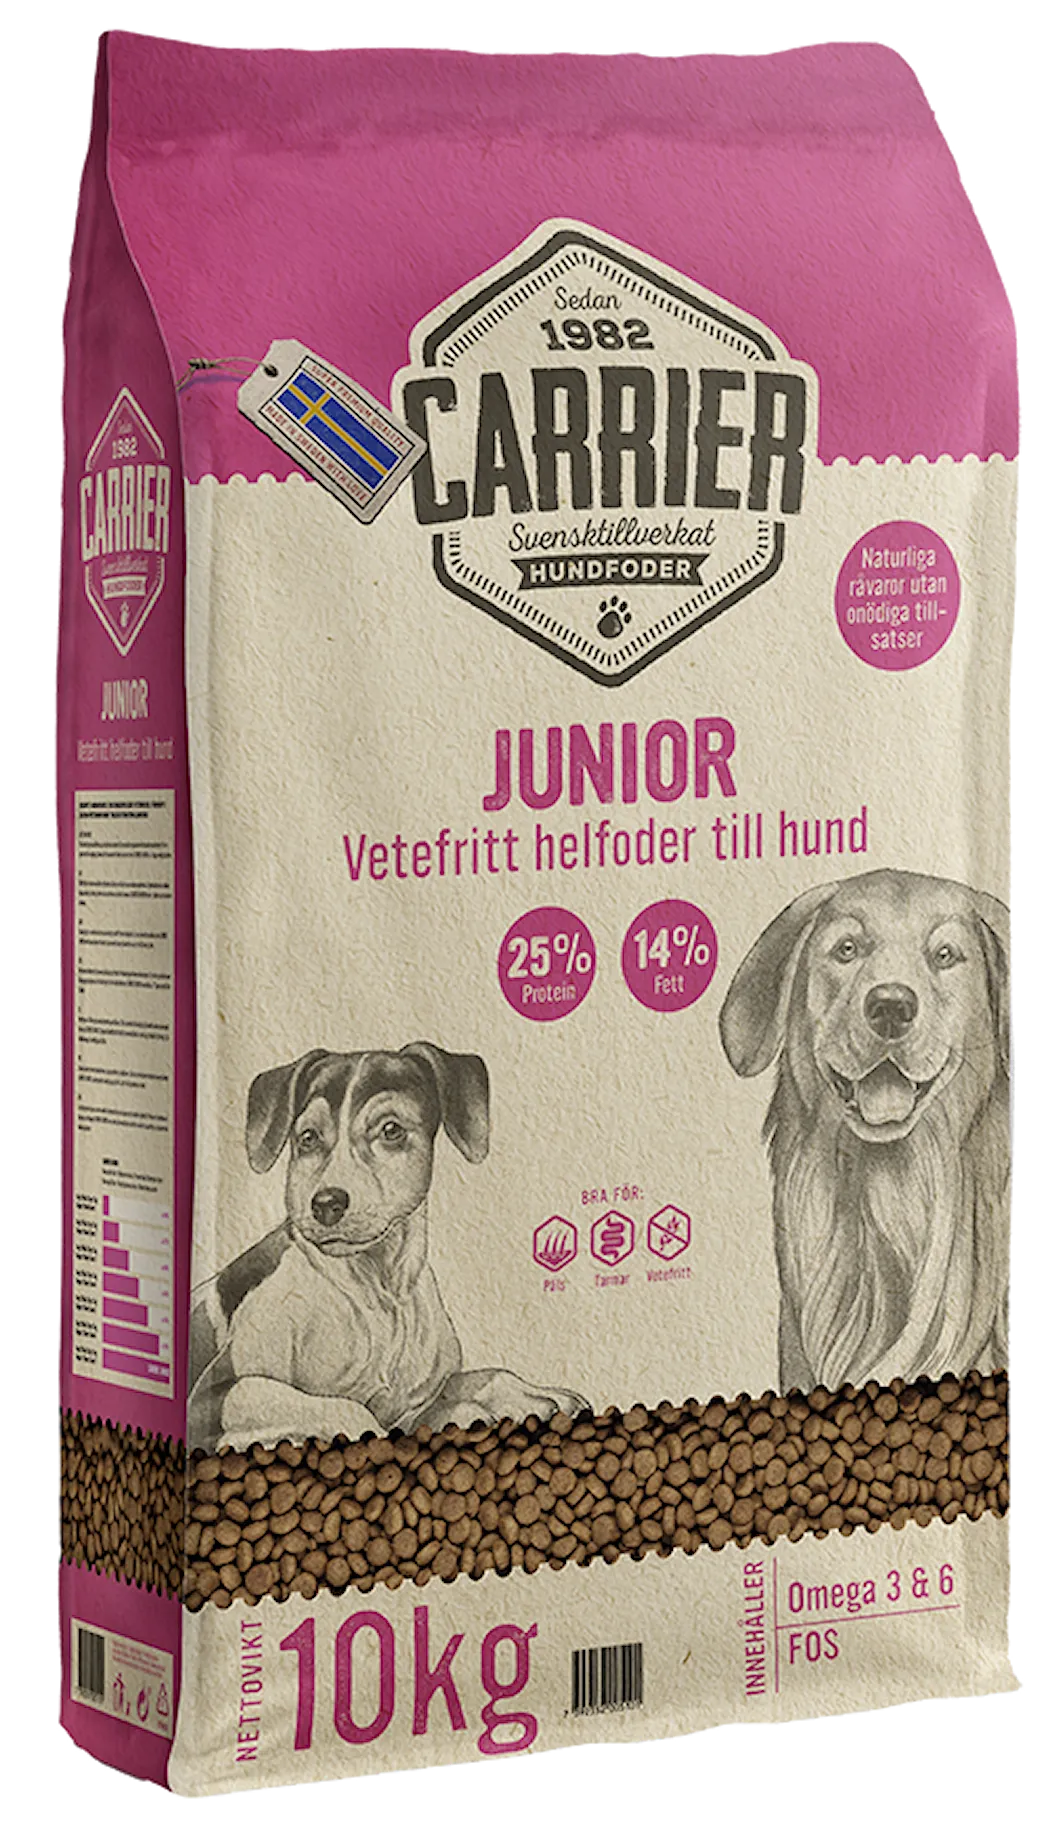 Carrier Junior